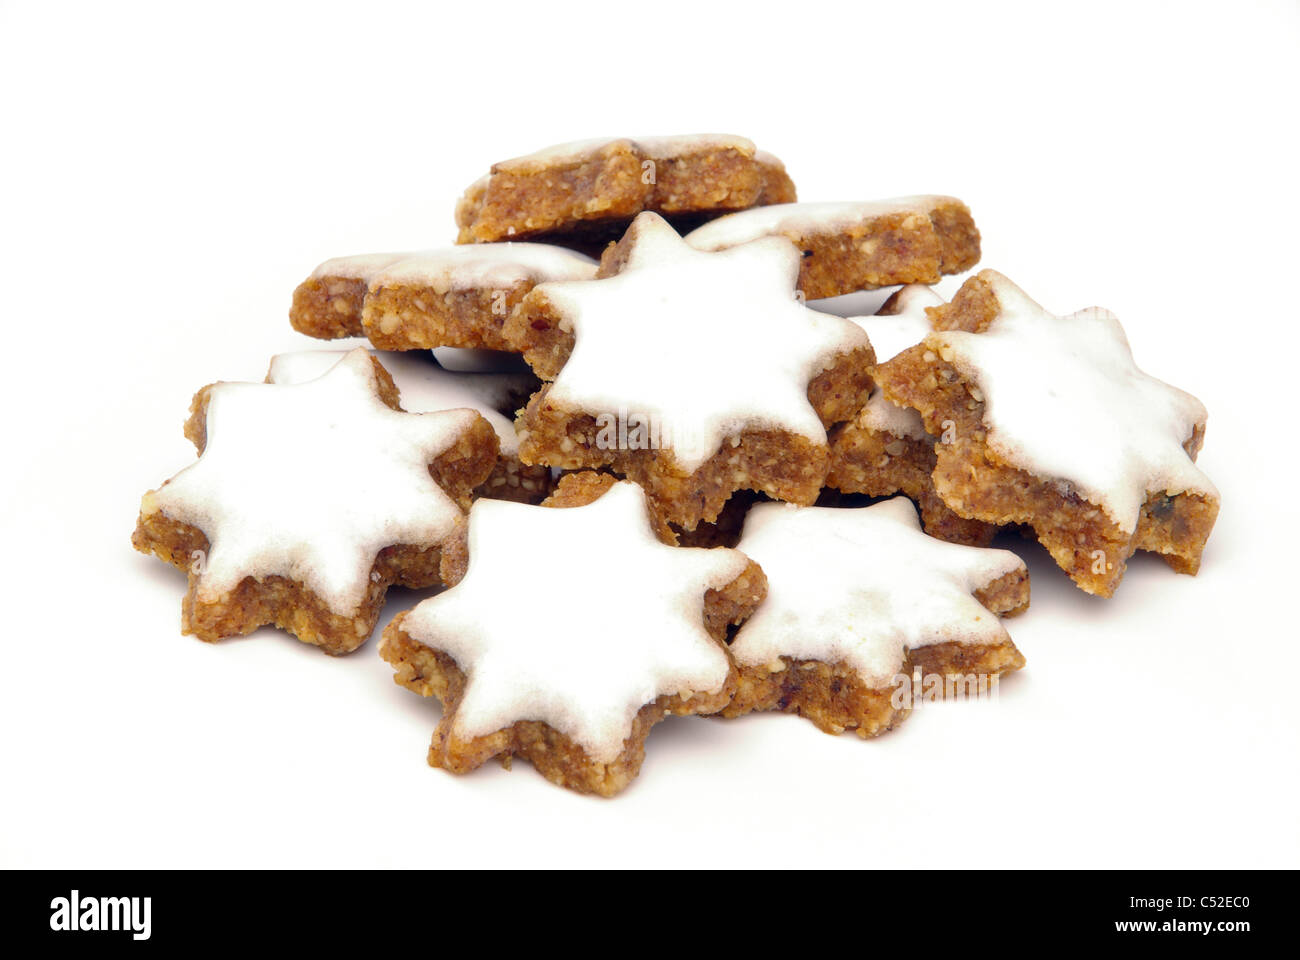 Zimtstern - star-shaped cinnamon biscuit 05 Stock Photo